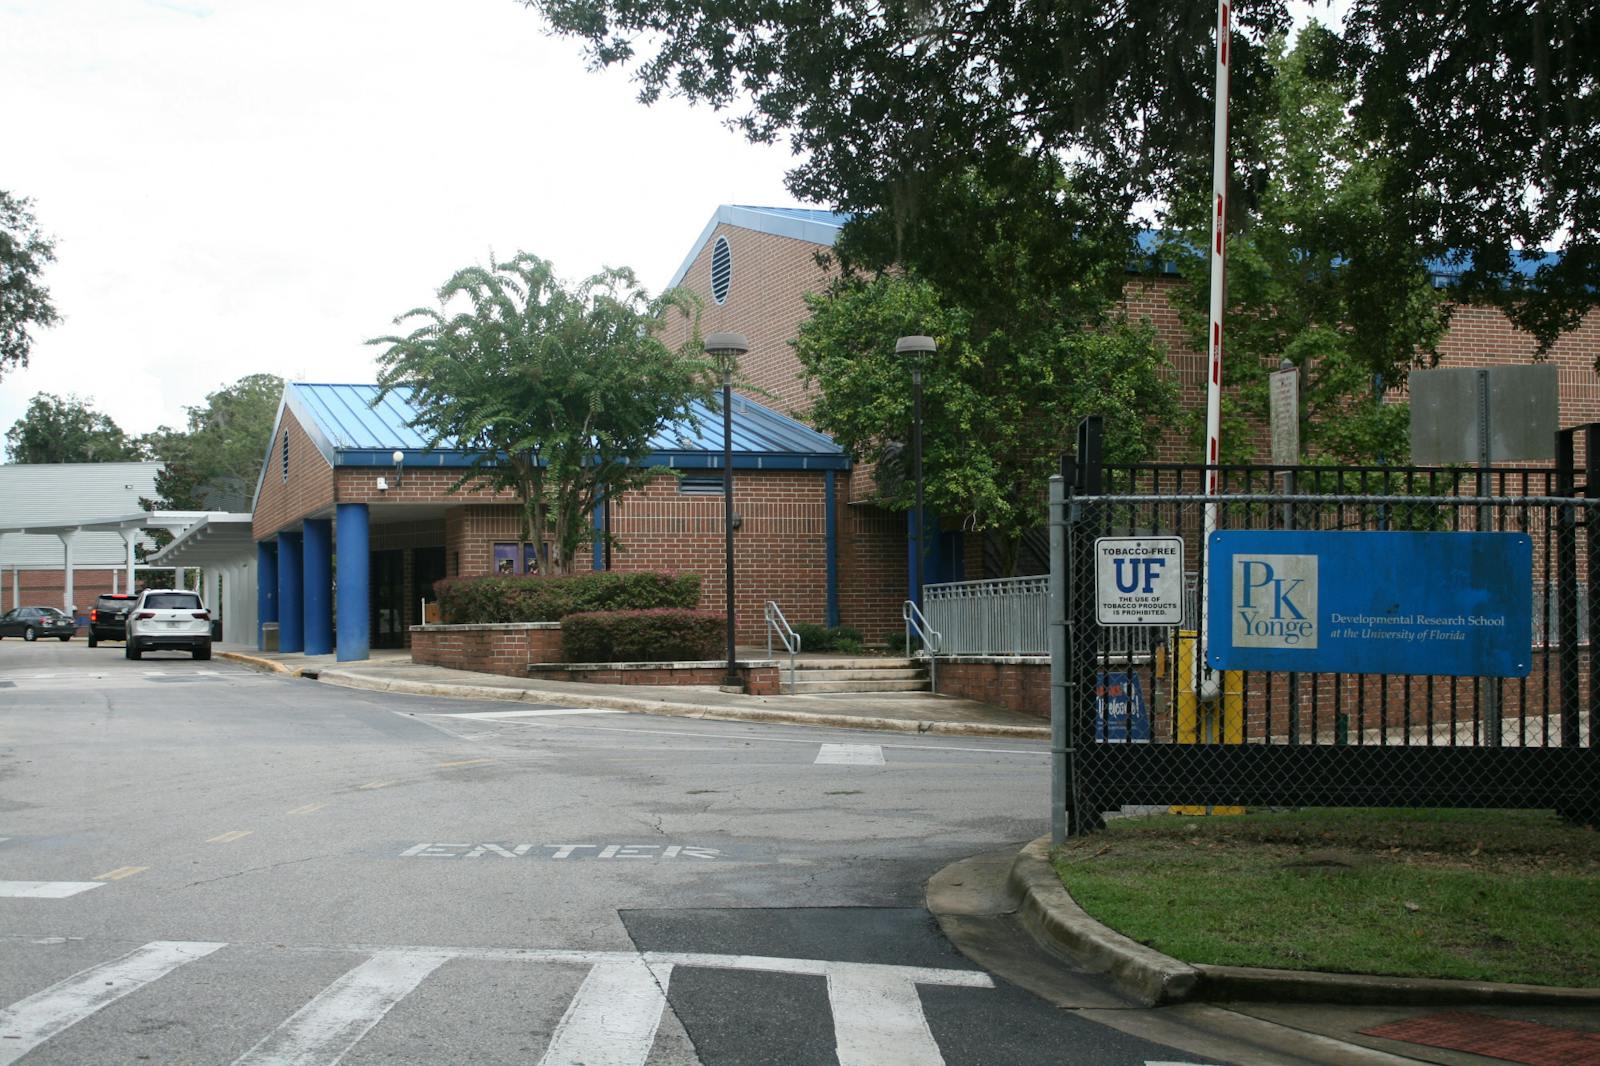 P.K. Yonge: A UF laboratory school with rich history